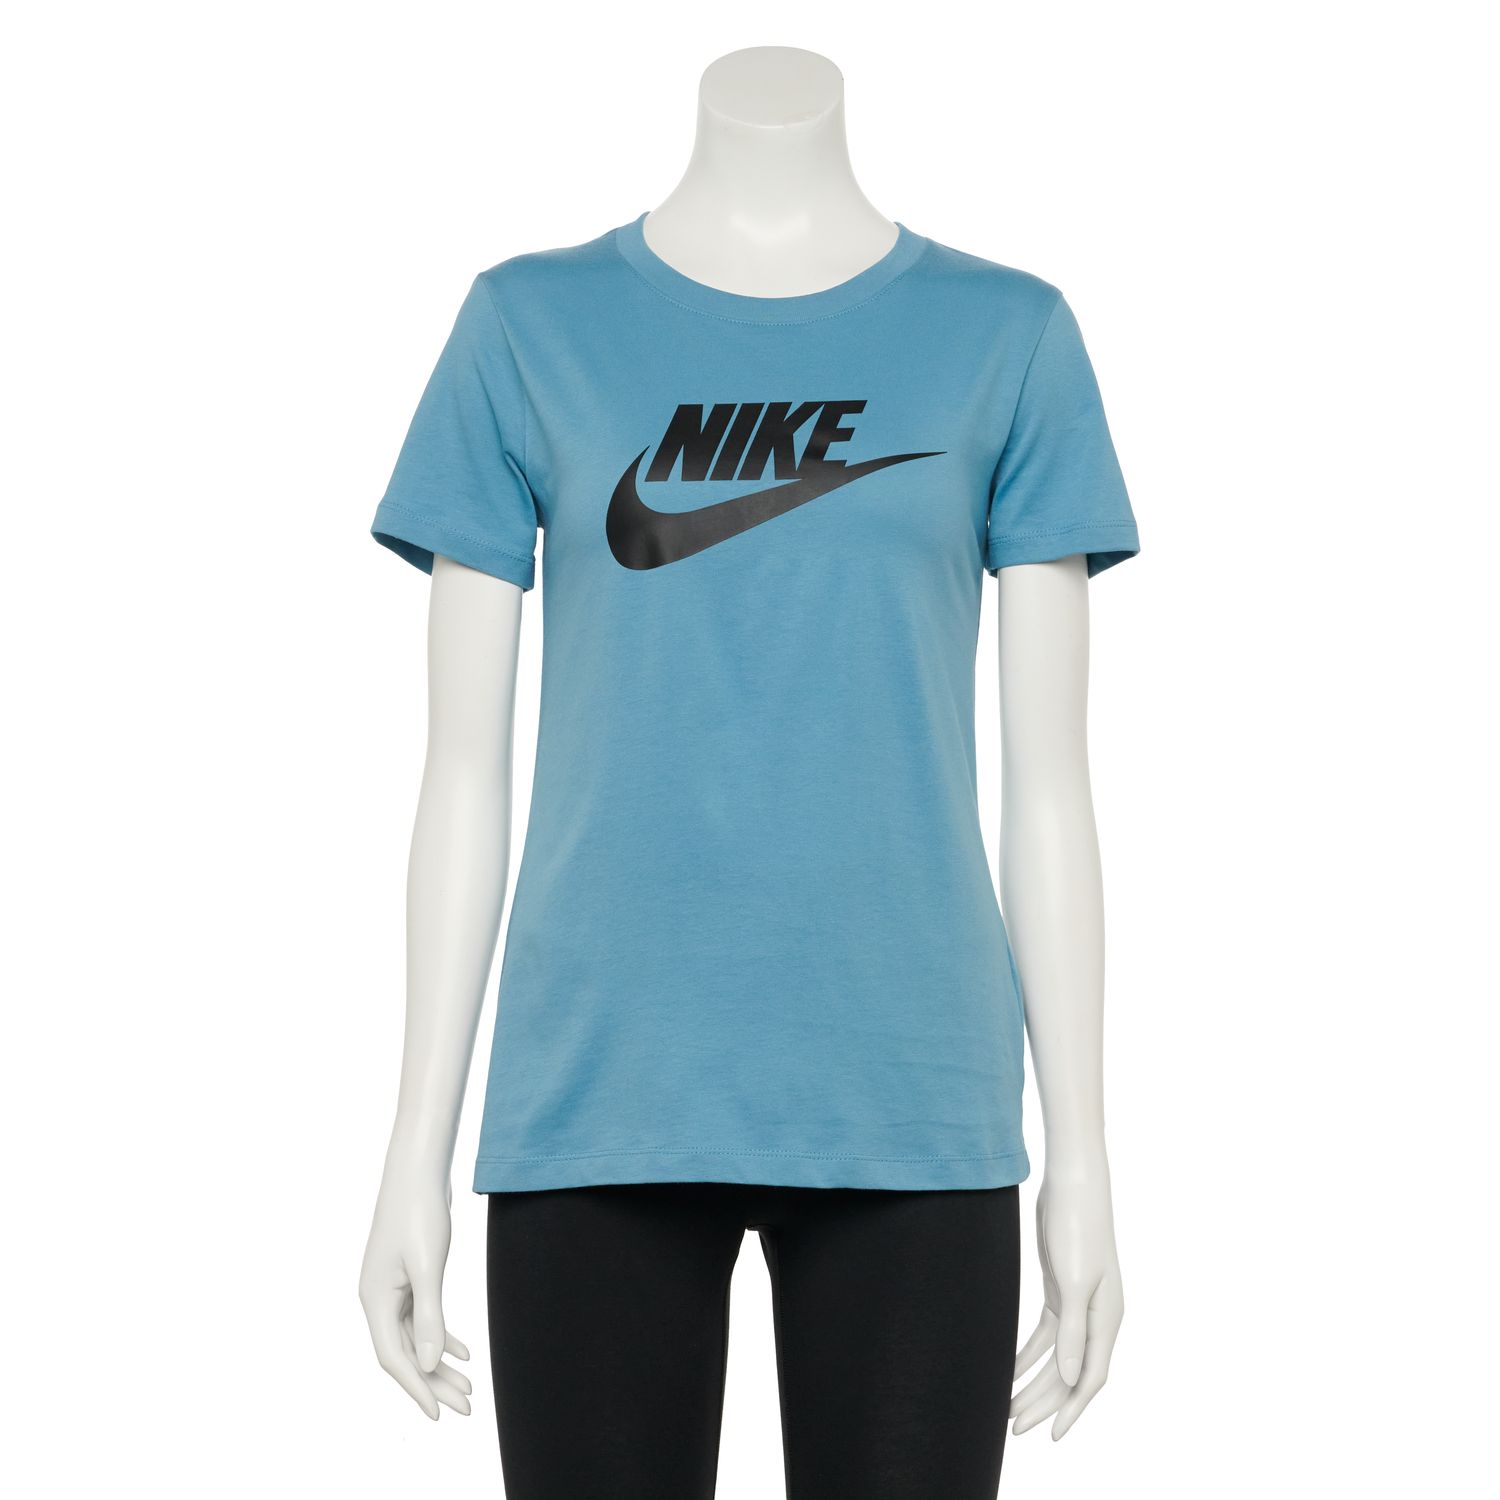 Womens Blue Nike T-Shirts Tops 